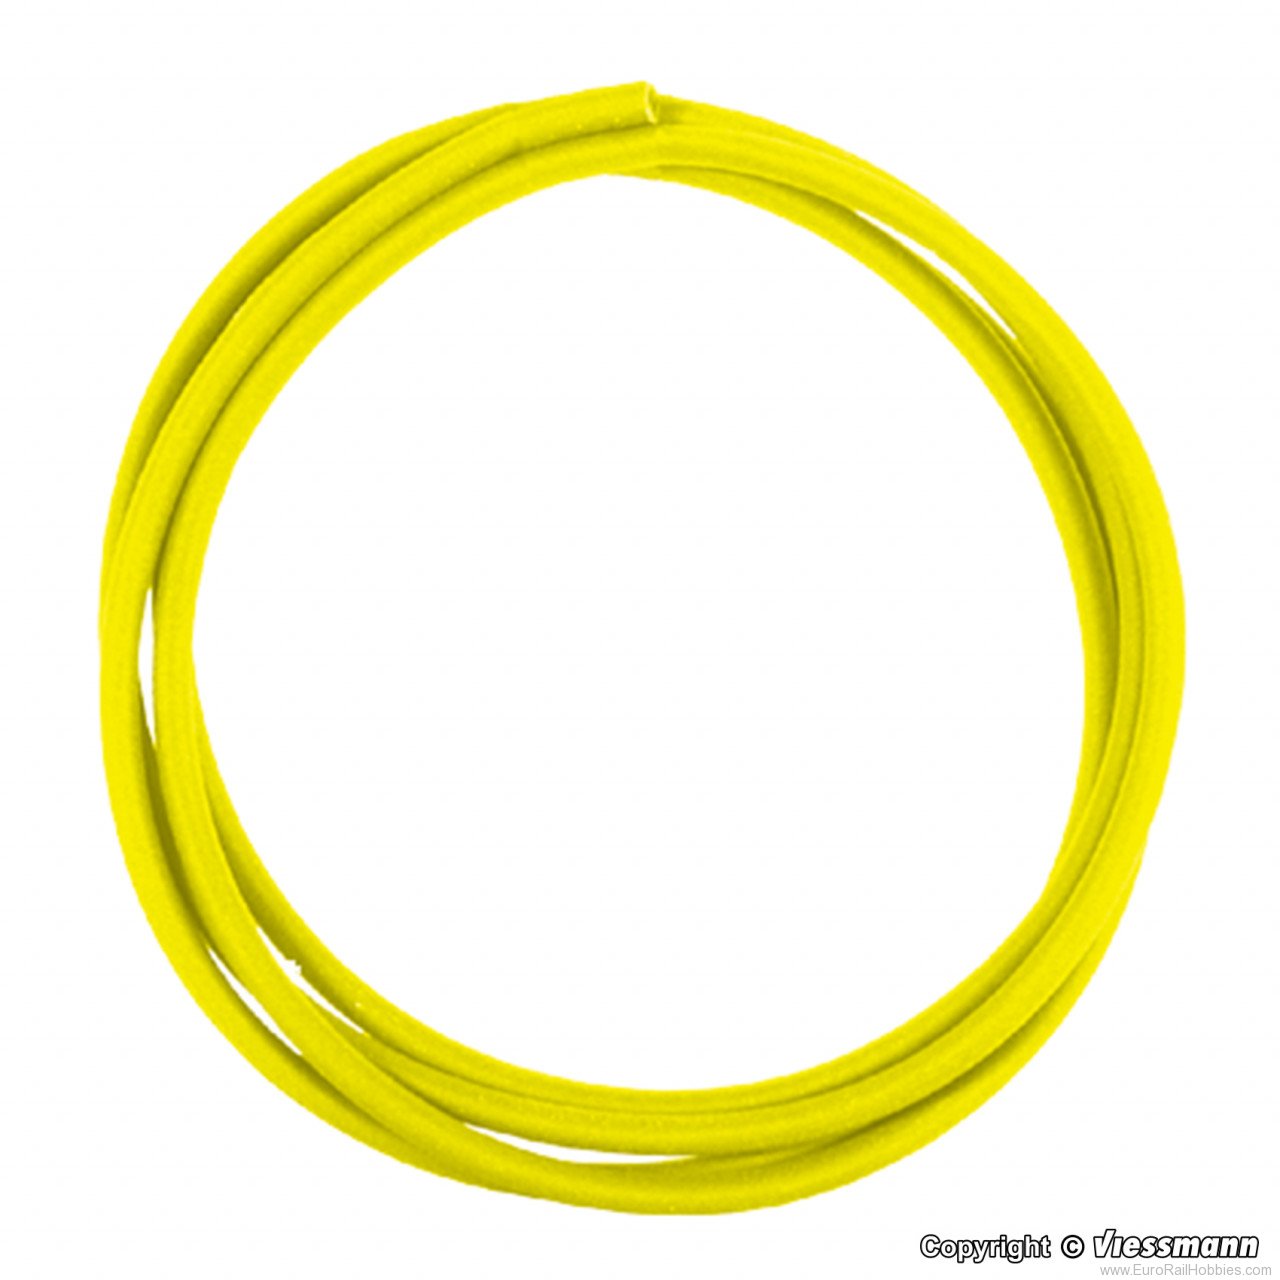 Viessmann 6815 Heat-shrink tube, yellow, 40 cm, inside diame